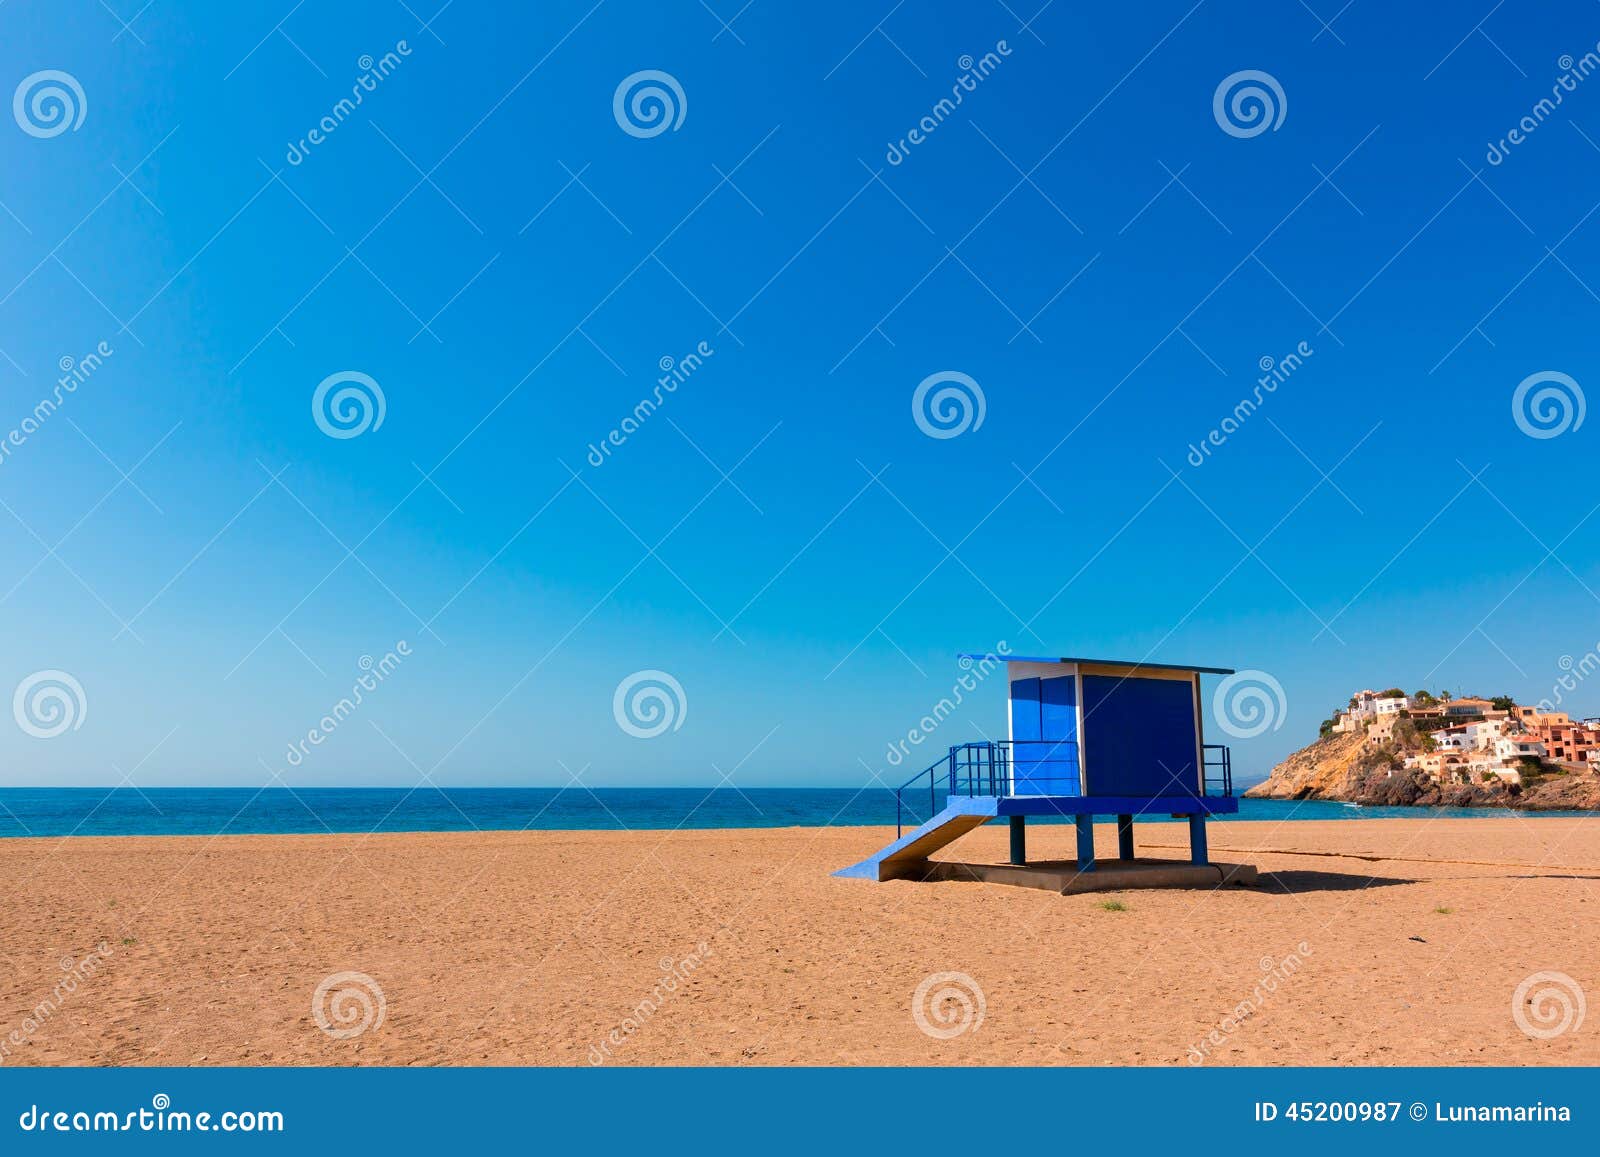 bolnuevo beach in mazarron murcia at spain